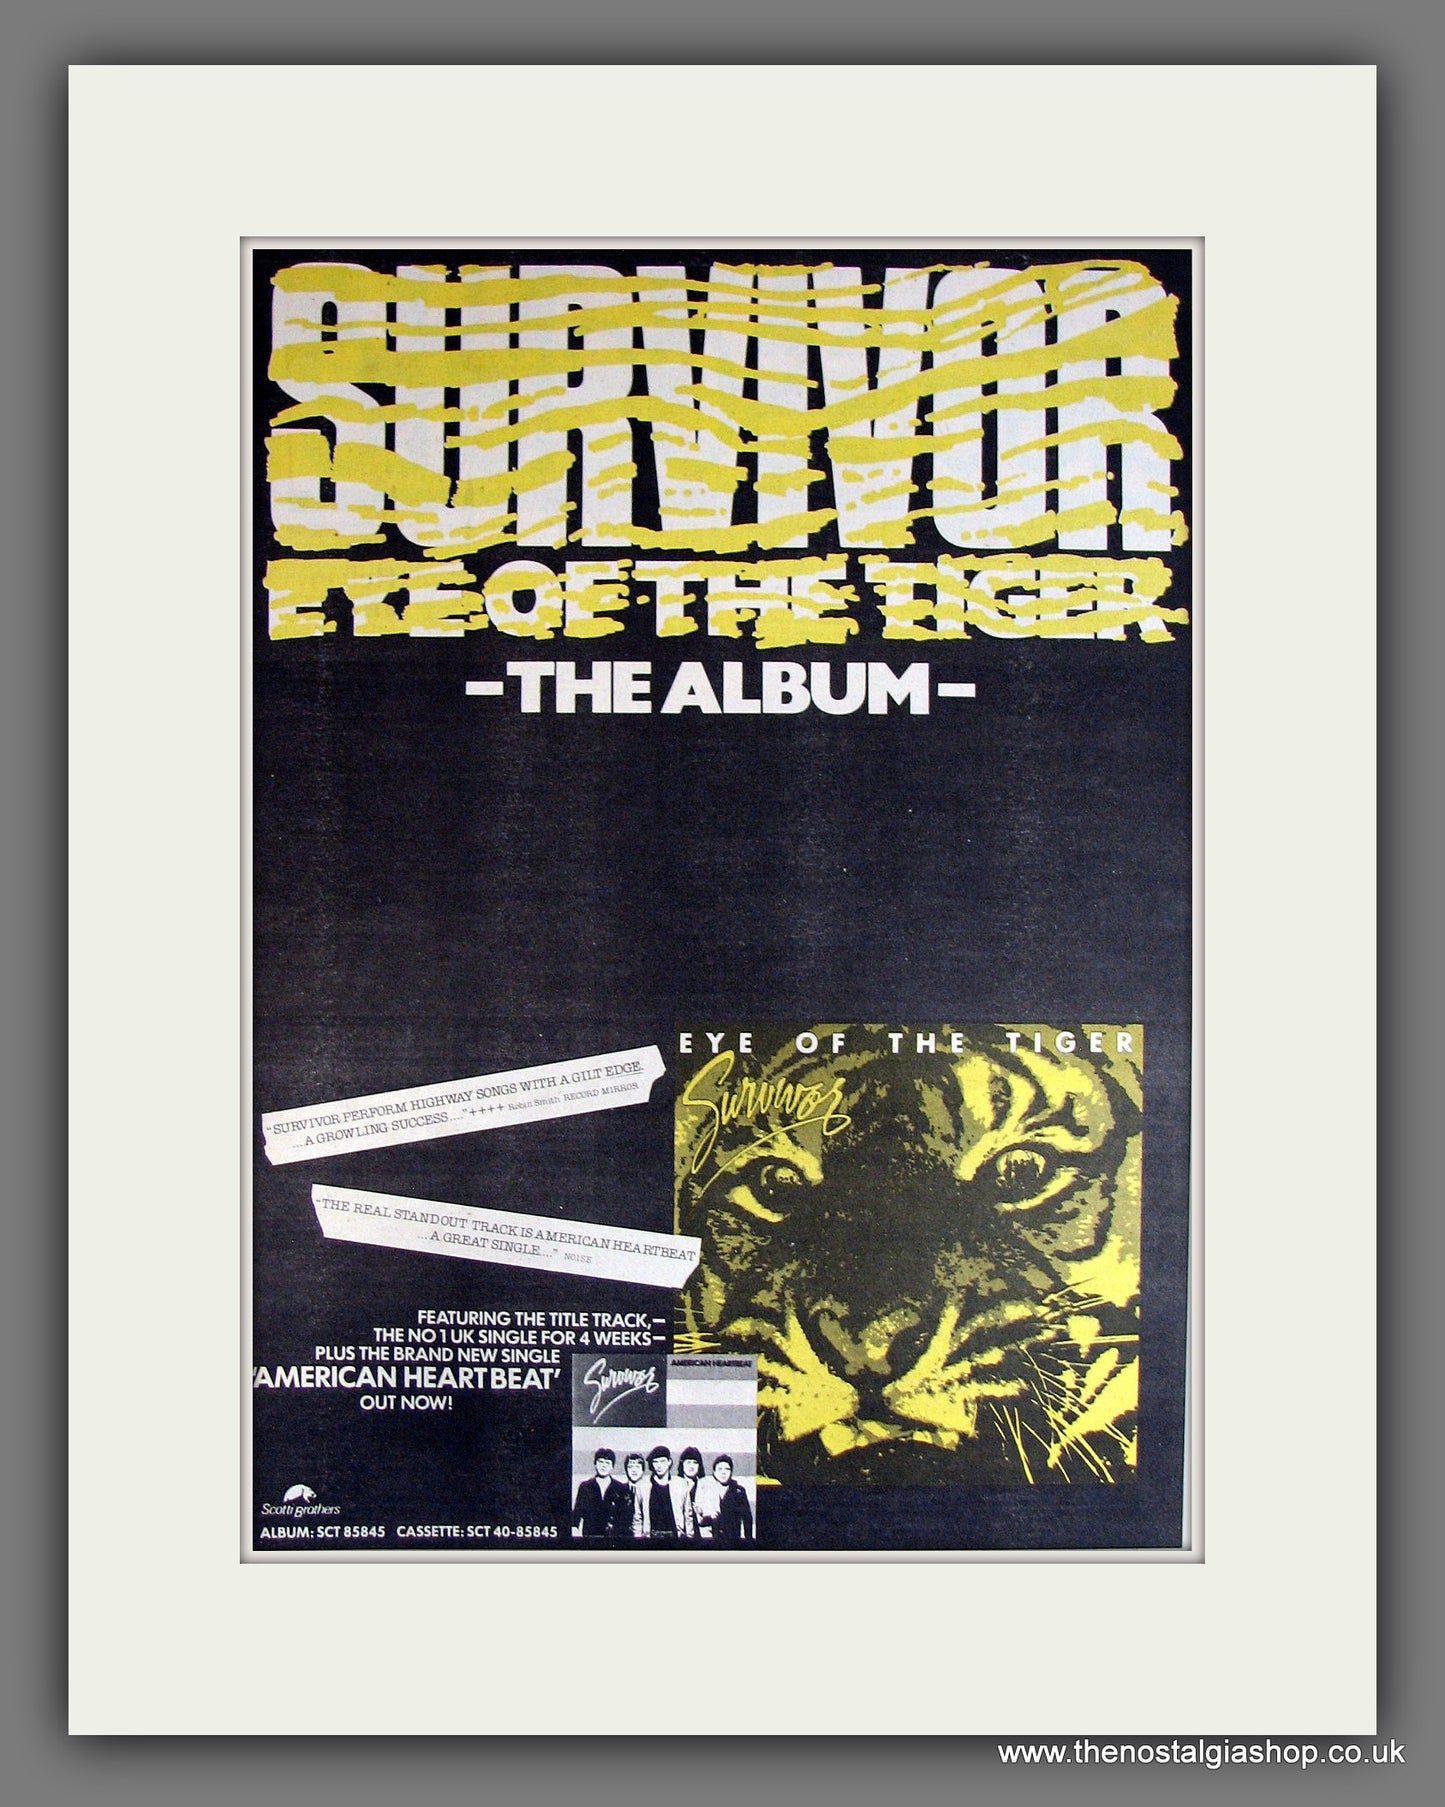 Survivor, Eye Of The Tiger, Cassette (Album)